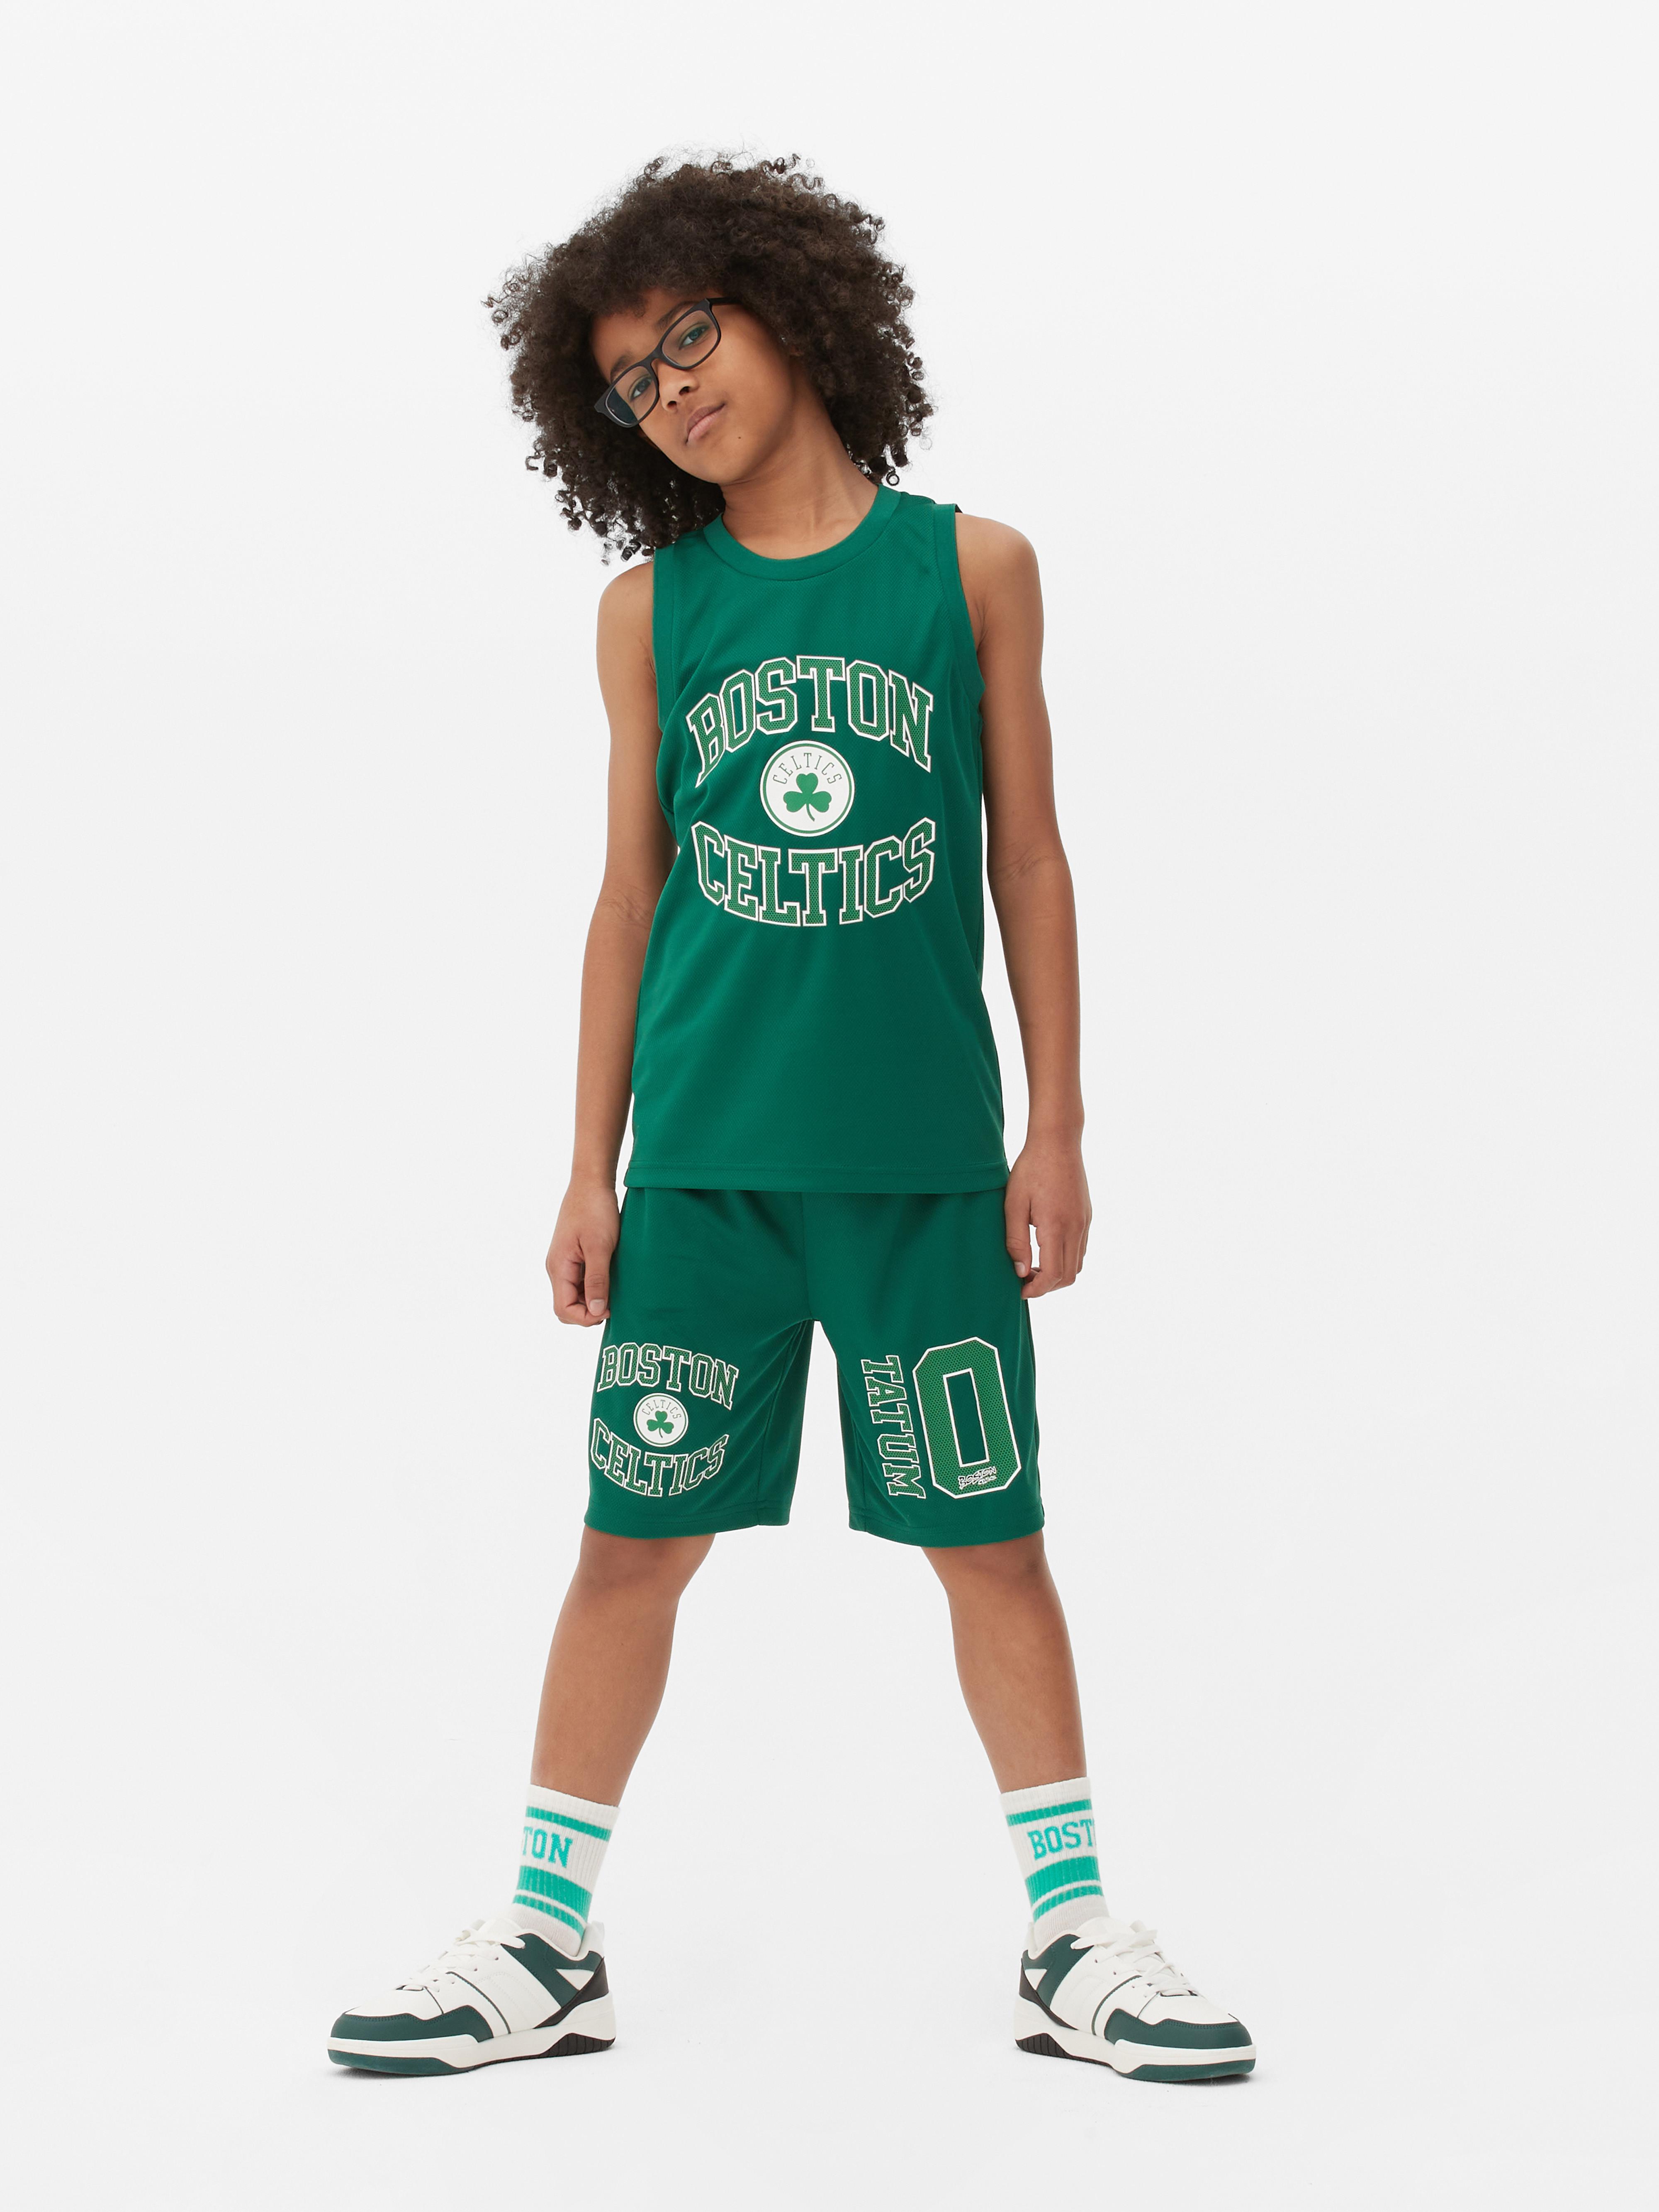 Conjunto deportivo de los Boston Celtics de la NBA